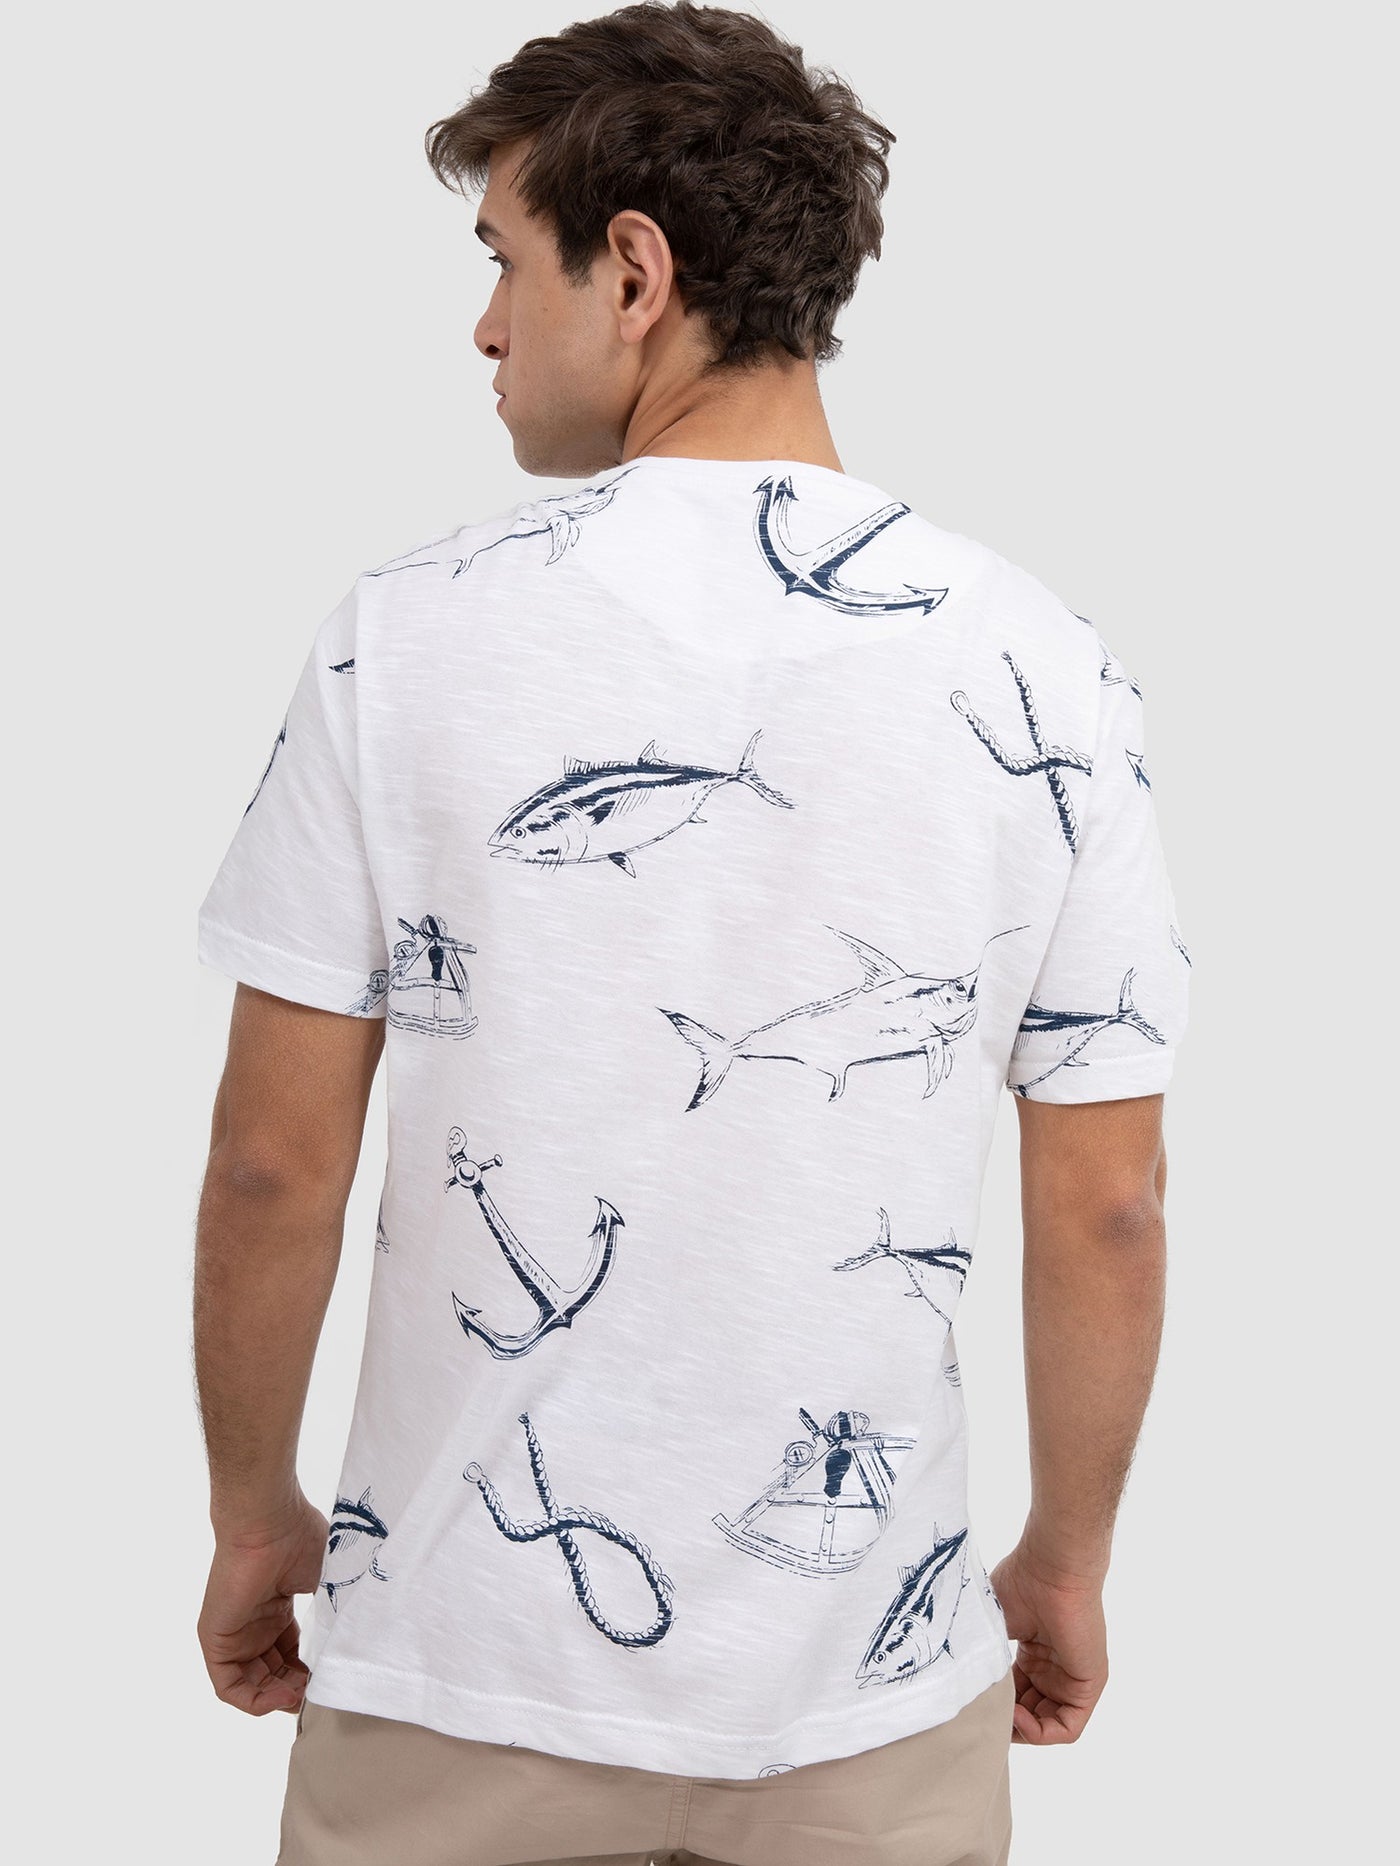 Premoda Mens All-Over Print Fishing Tools T-Shirt